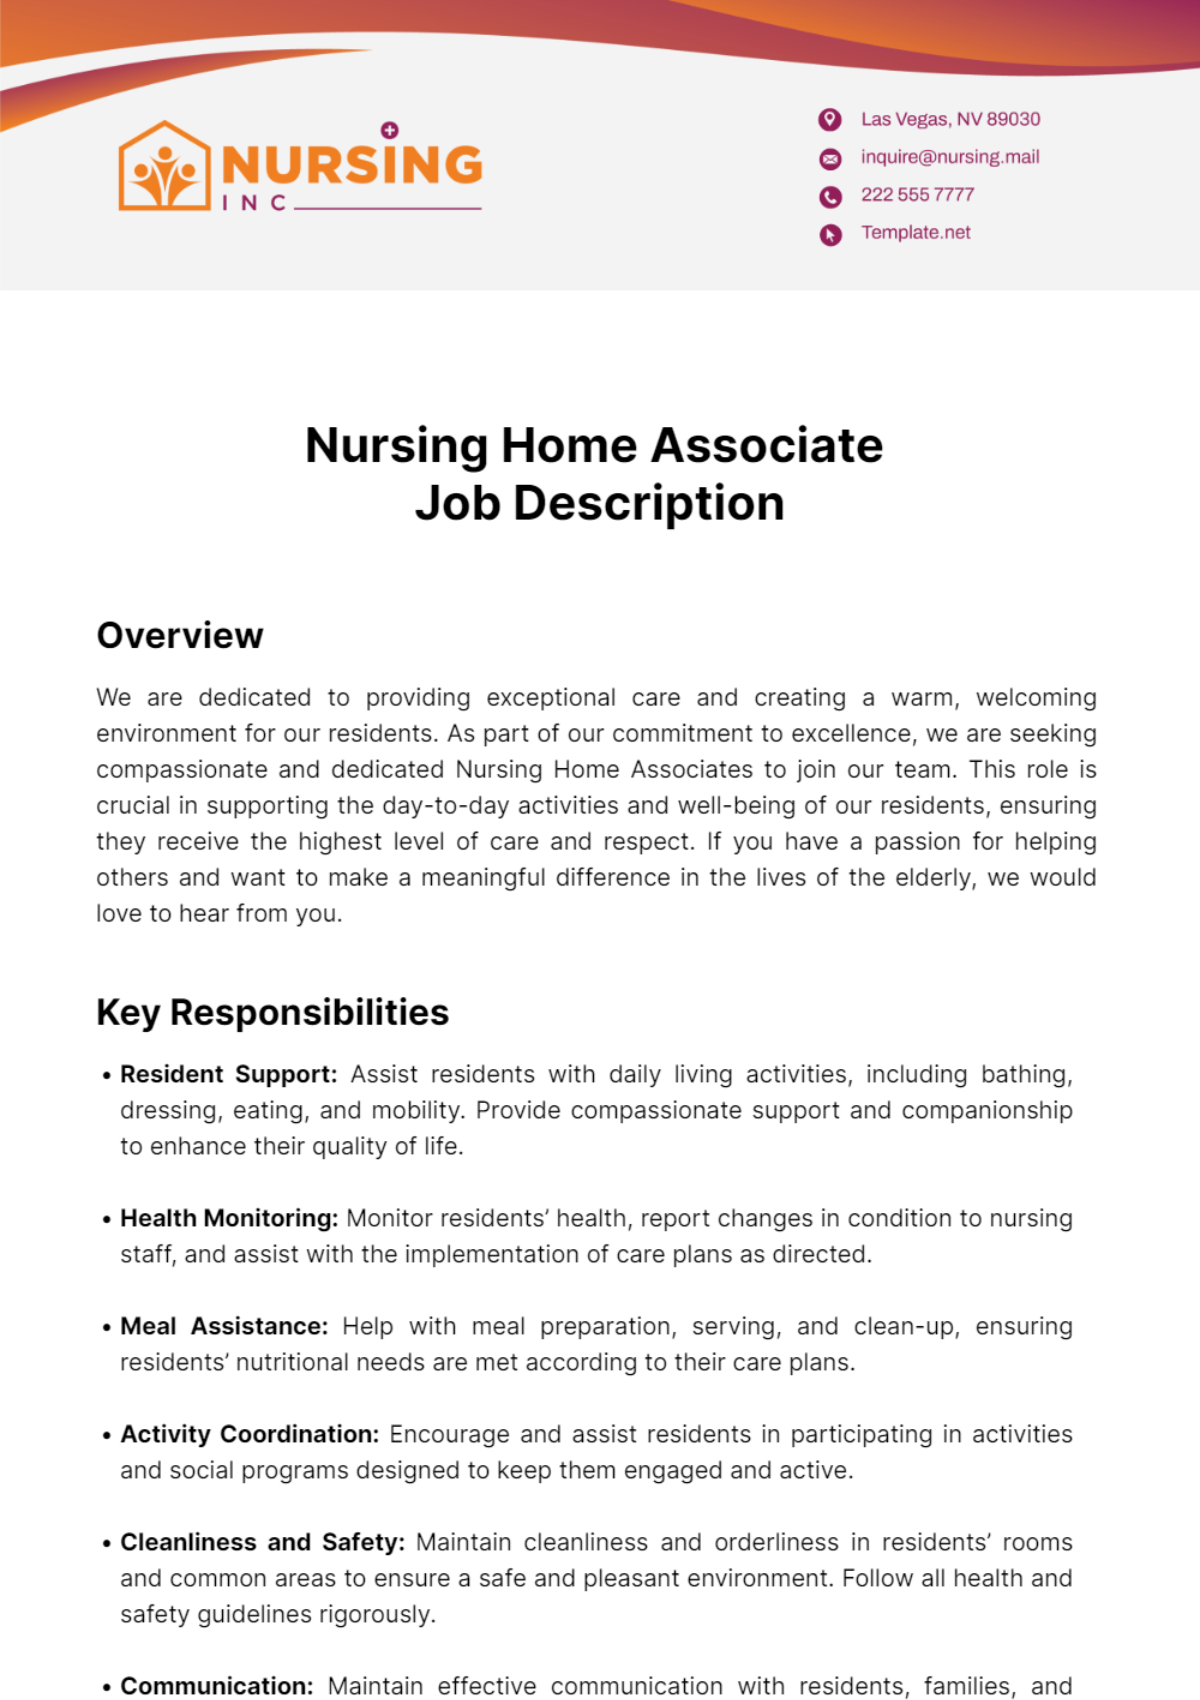 Nursing Home Associate Job Description Template